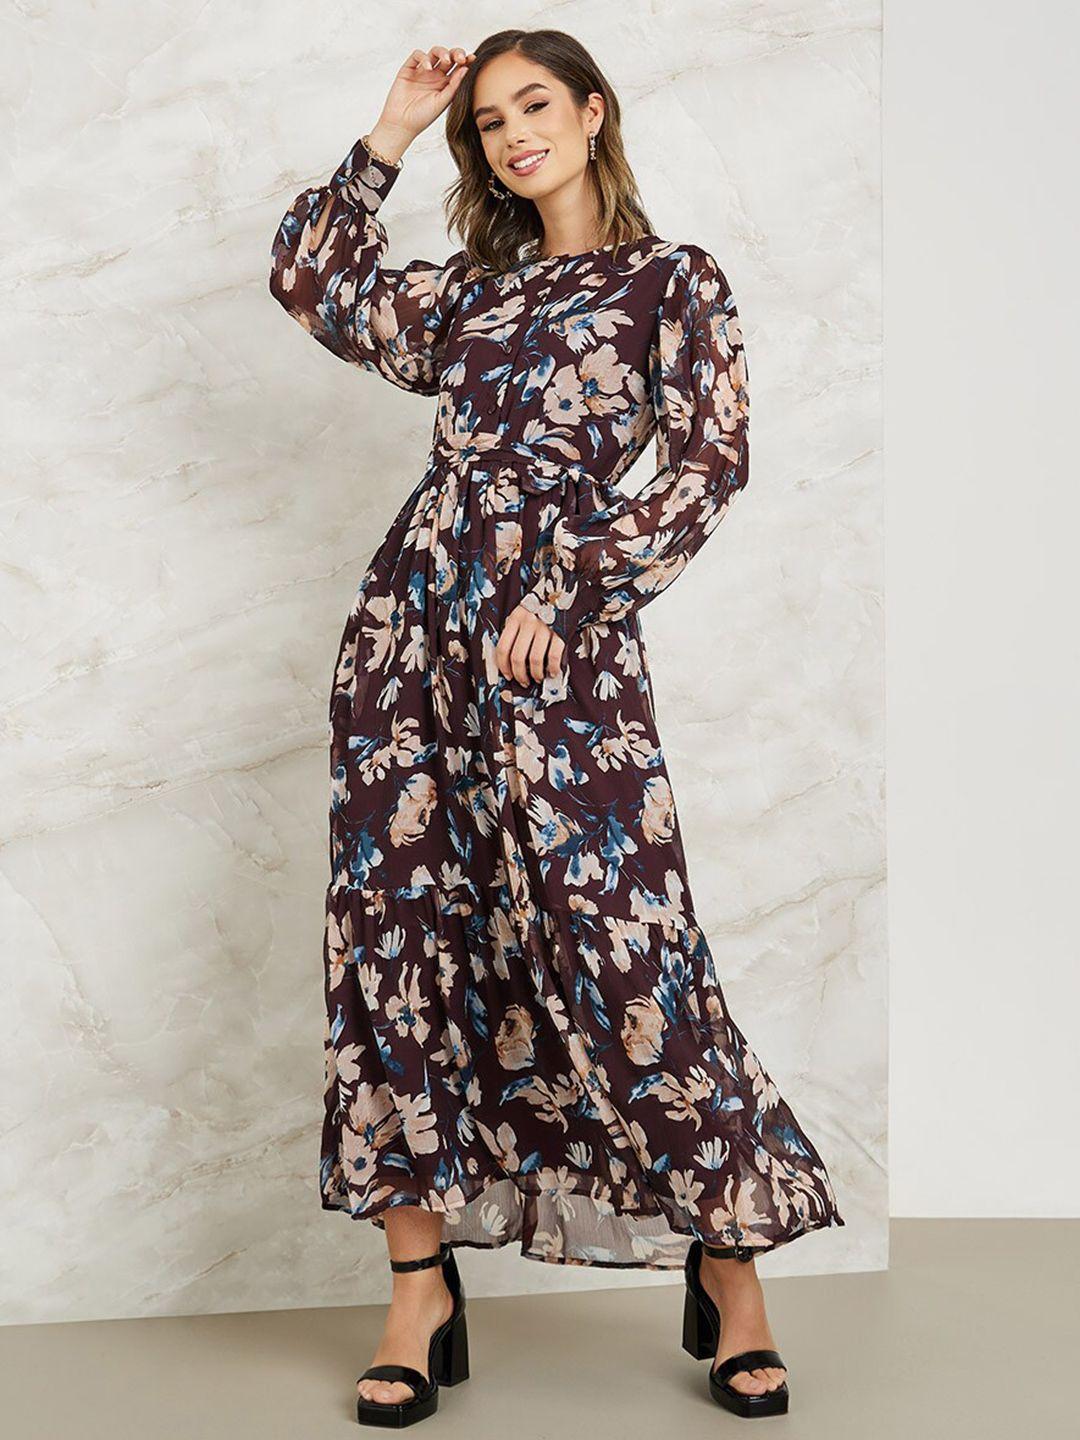 styli-floral-printed-maxi-dress